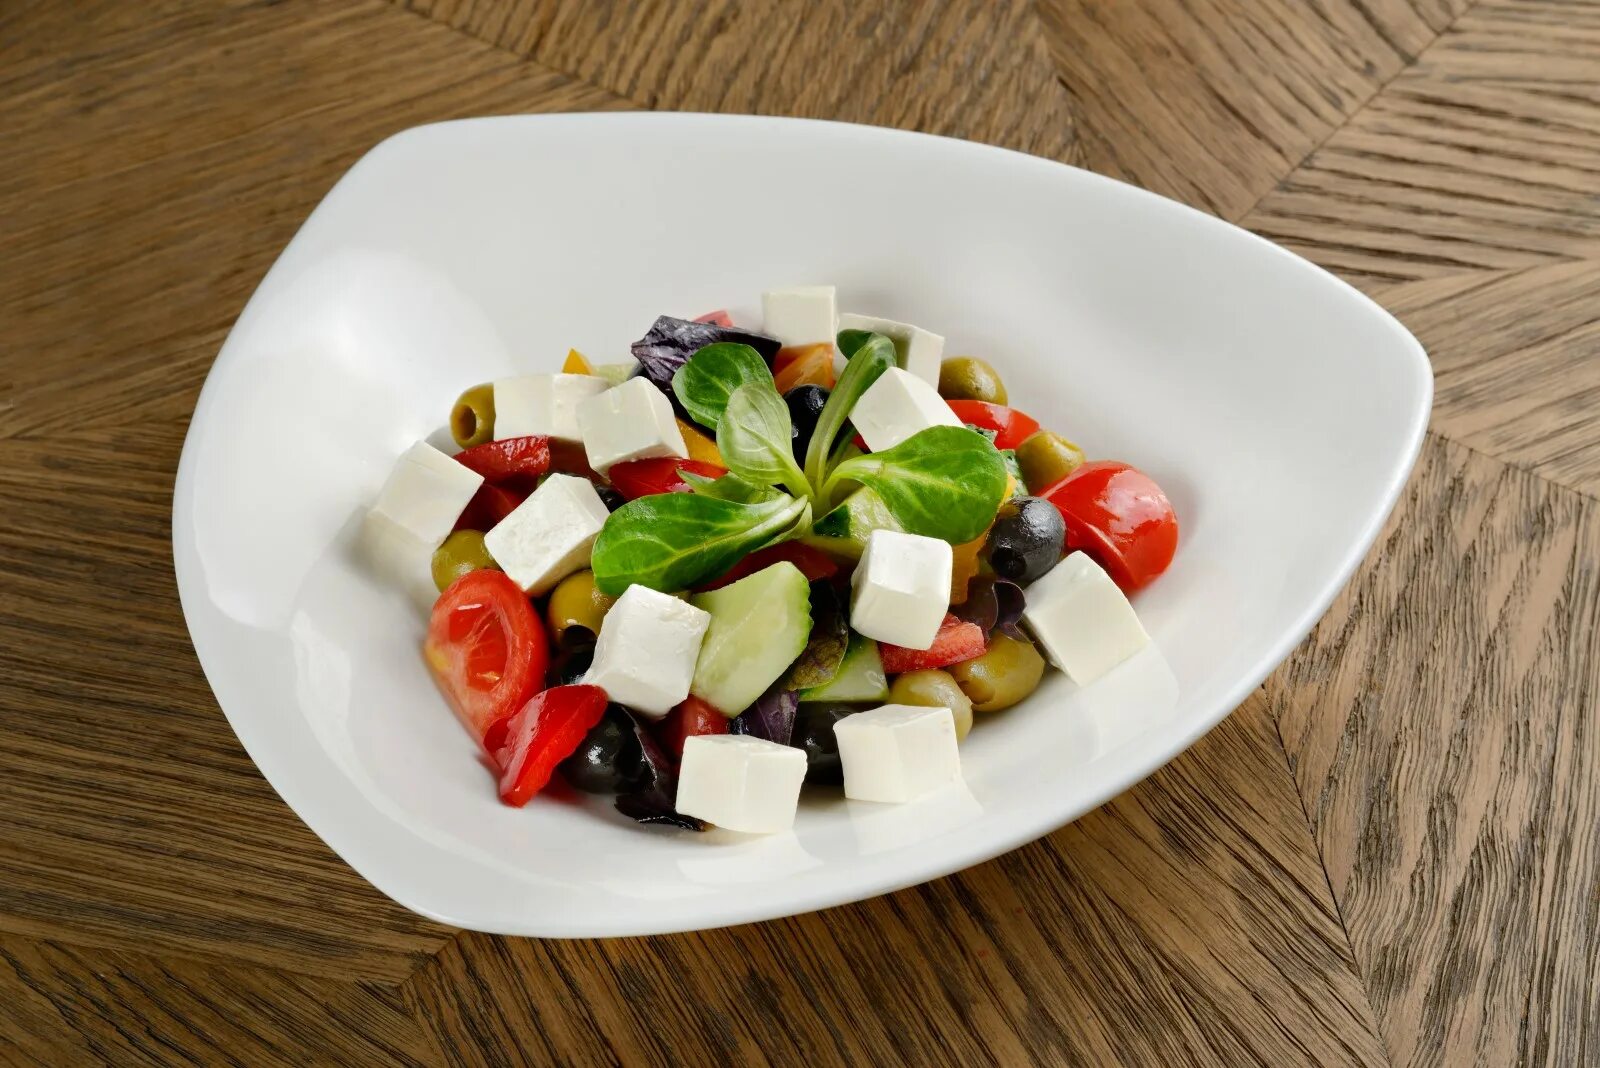 Курица фетакса. Ресторан Пифагор греческий салат. Греческий салат ресторанная подача. Салат греческий красивая подача. Греческий салат в ресторане.